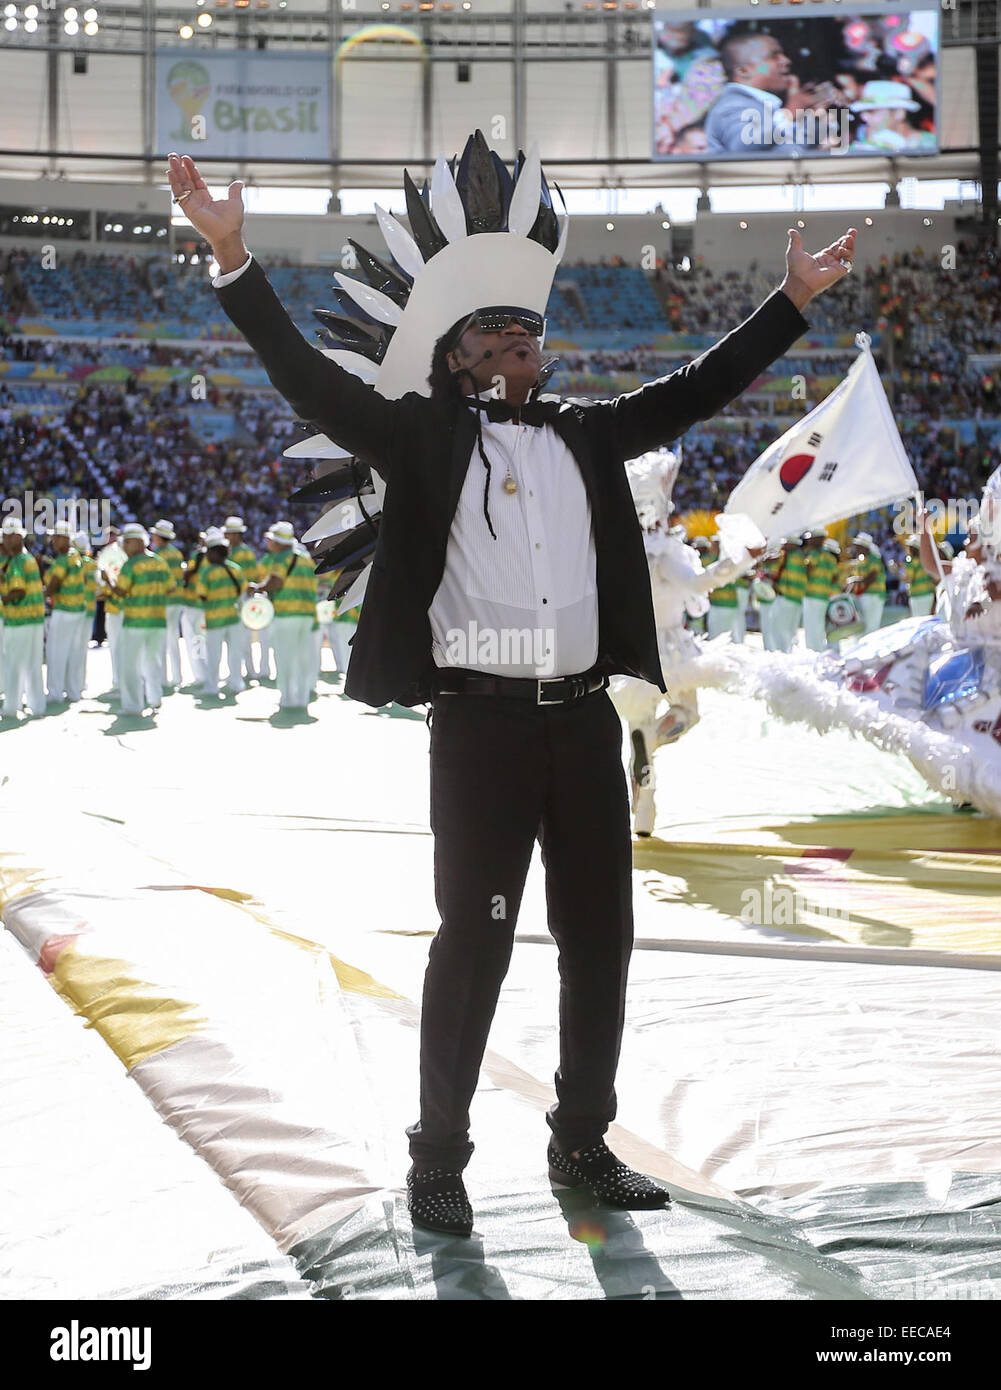 2014 FIFA World Cup - Closing Ceremony and Atmosphere - Maracana Stadium (Estadio Maracana)  Featuring: Carlinhos Brown Where: Rio de Janeiro, Brazil When: 13 Jul 2014 Stock Photo